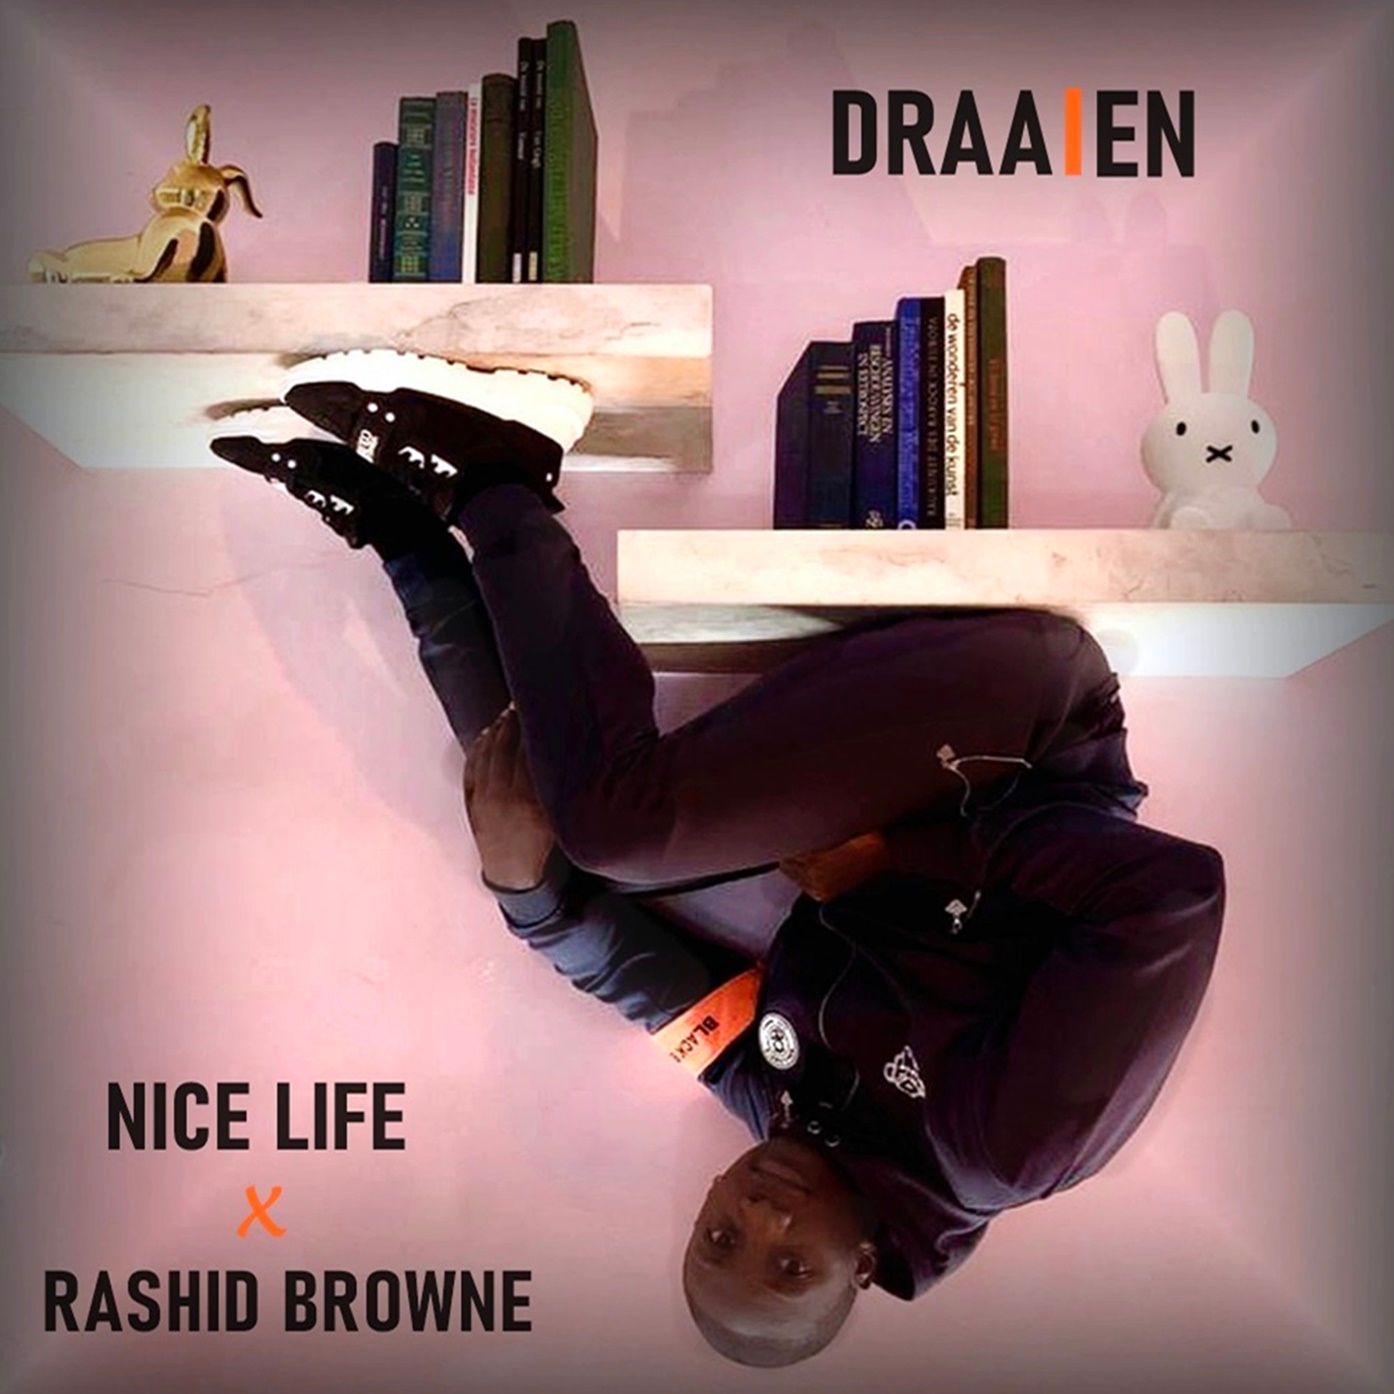 डाउनलोड करा Draaien  - Nice Life x Rashid Browne